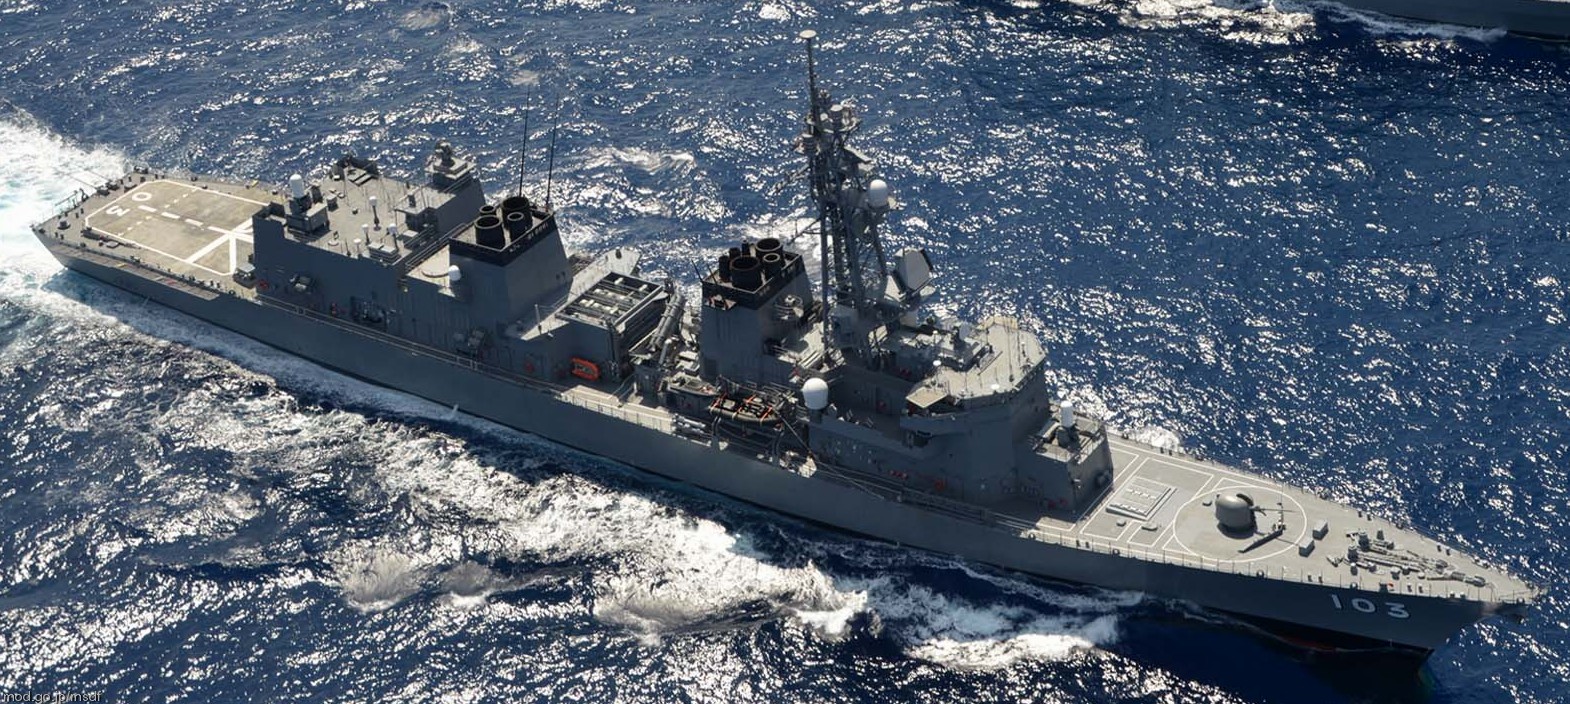 dd-103 js yudachi murasame class destroyer japan maritime self defense force jmsdf 10